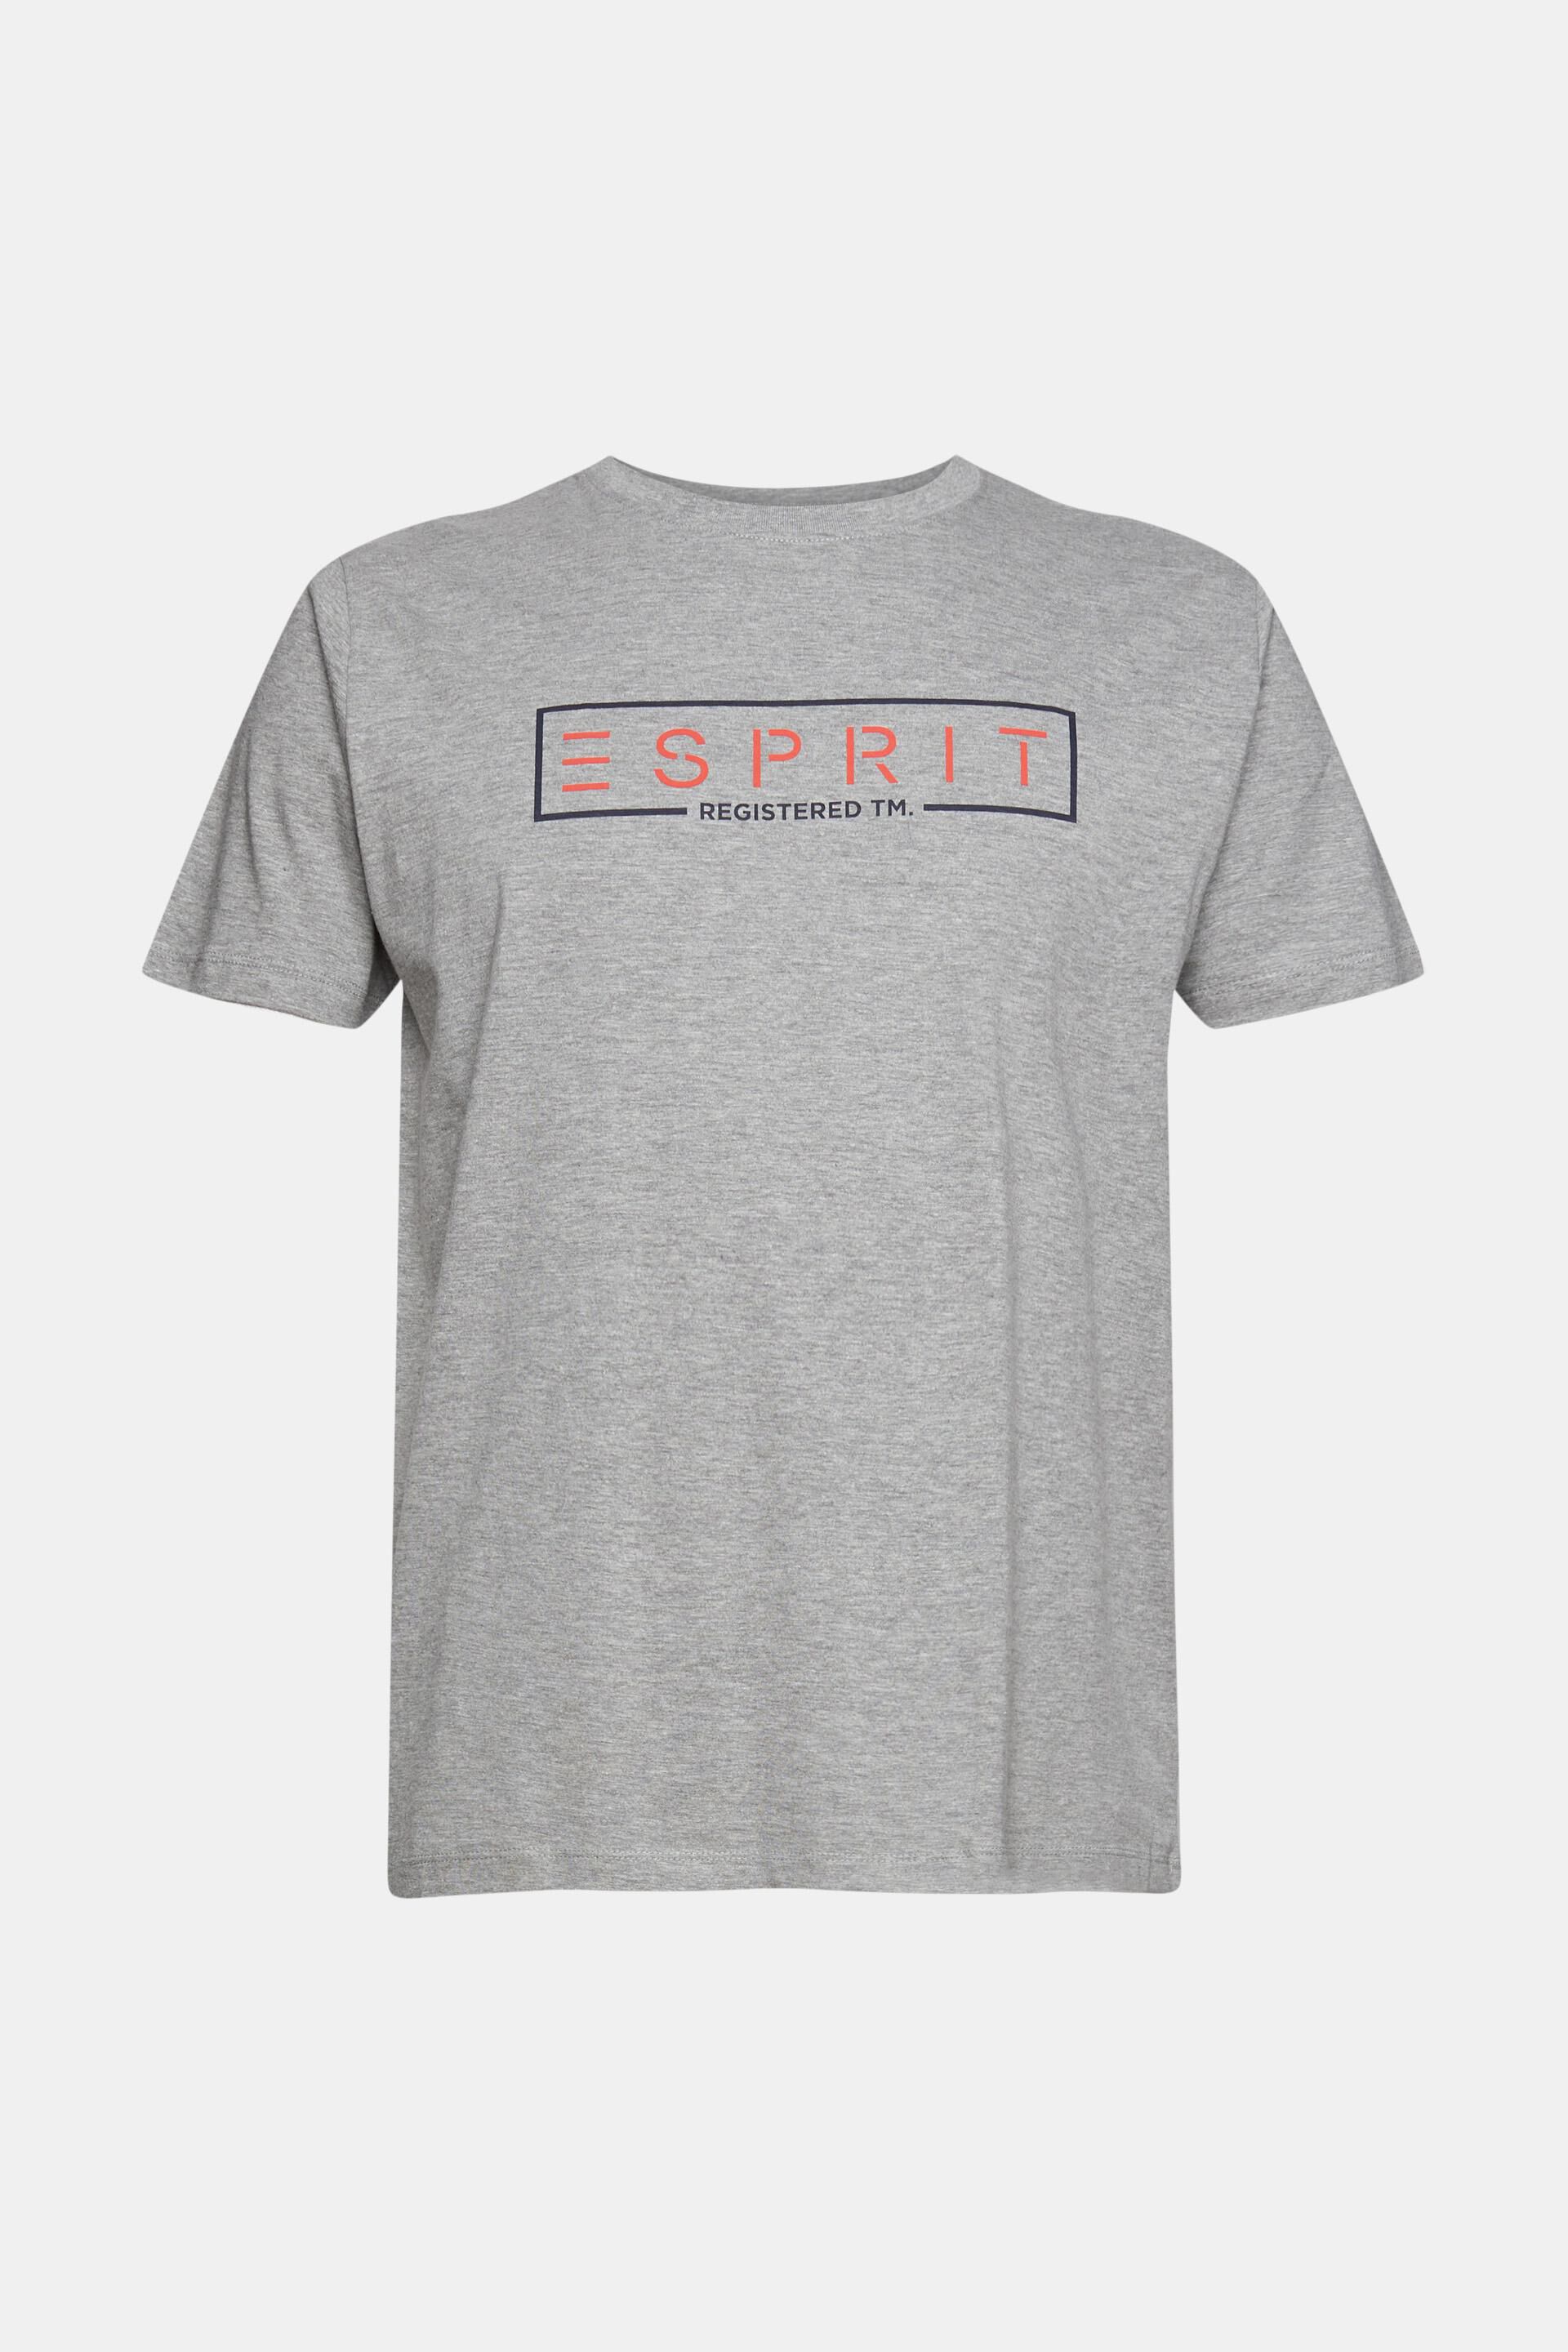 Esprit Short Sleeve tee-Shirt Camiseta para Niños 